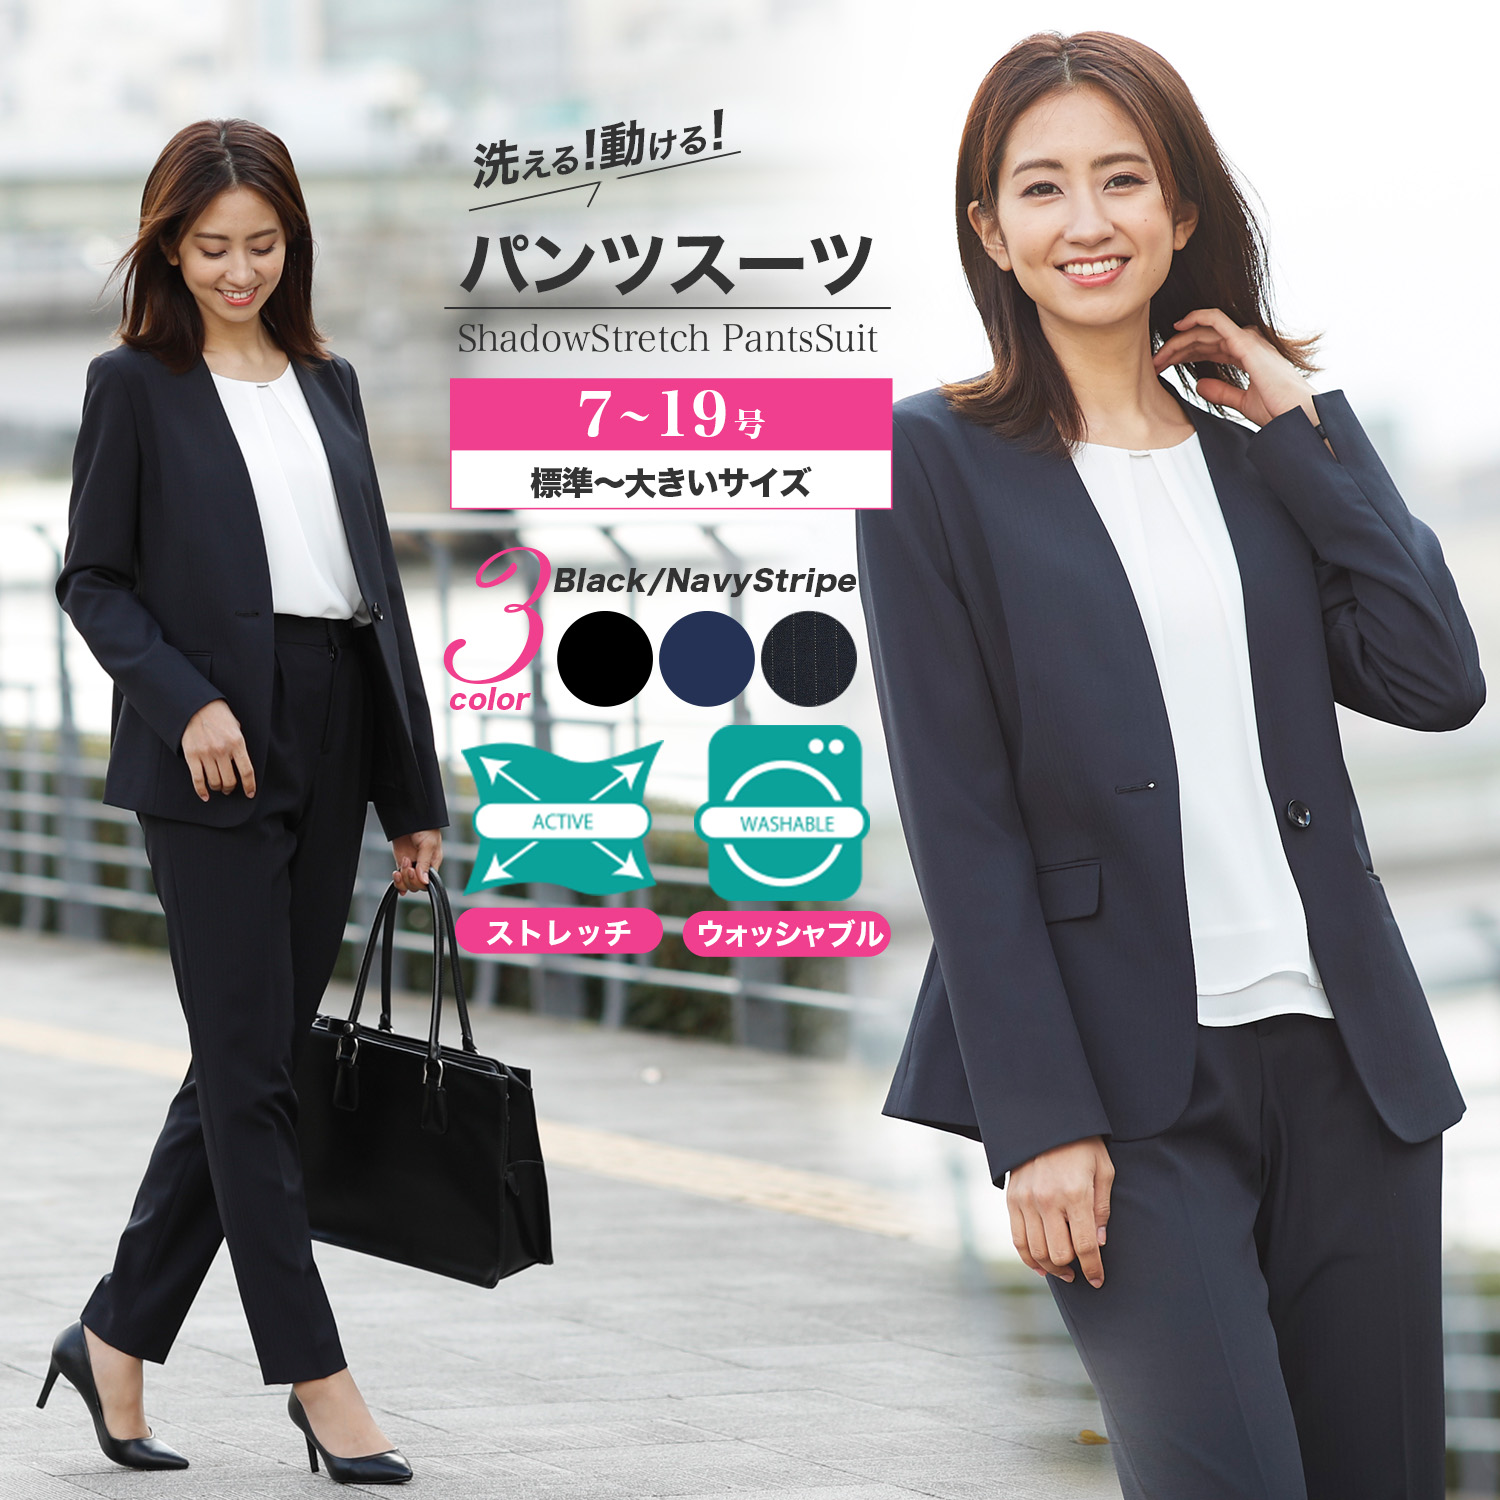 Ladies\u2019 Suit pink-light grey weave pattern casual look Fashion Suits Ladies’ Suits 